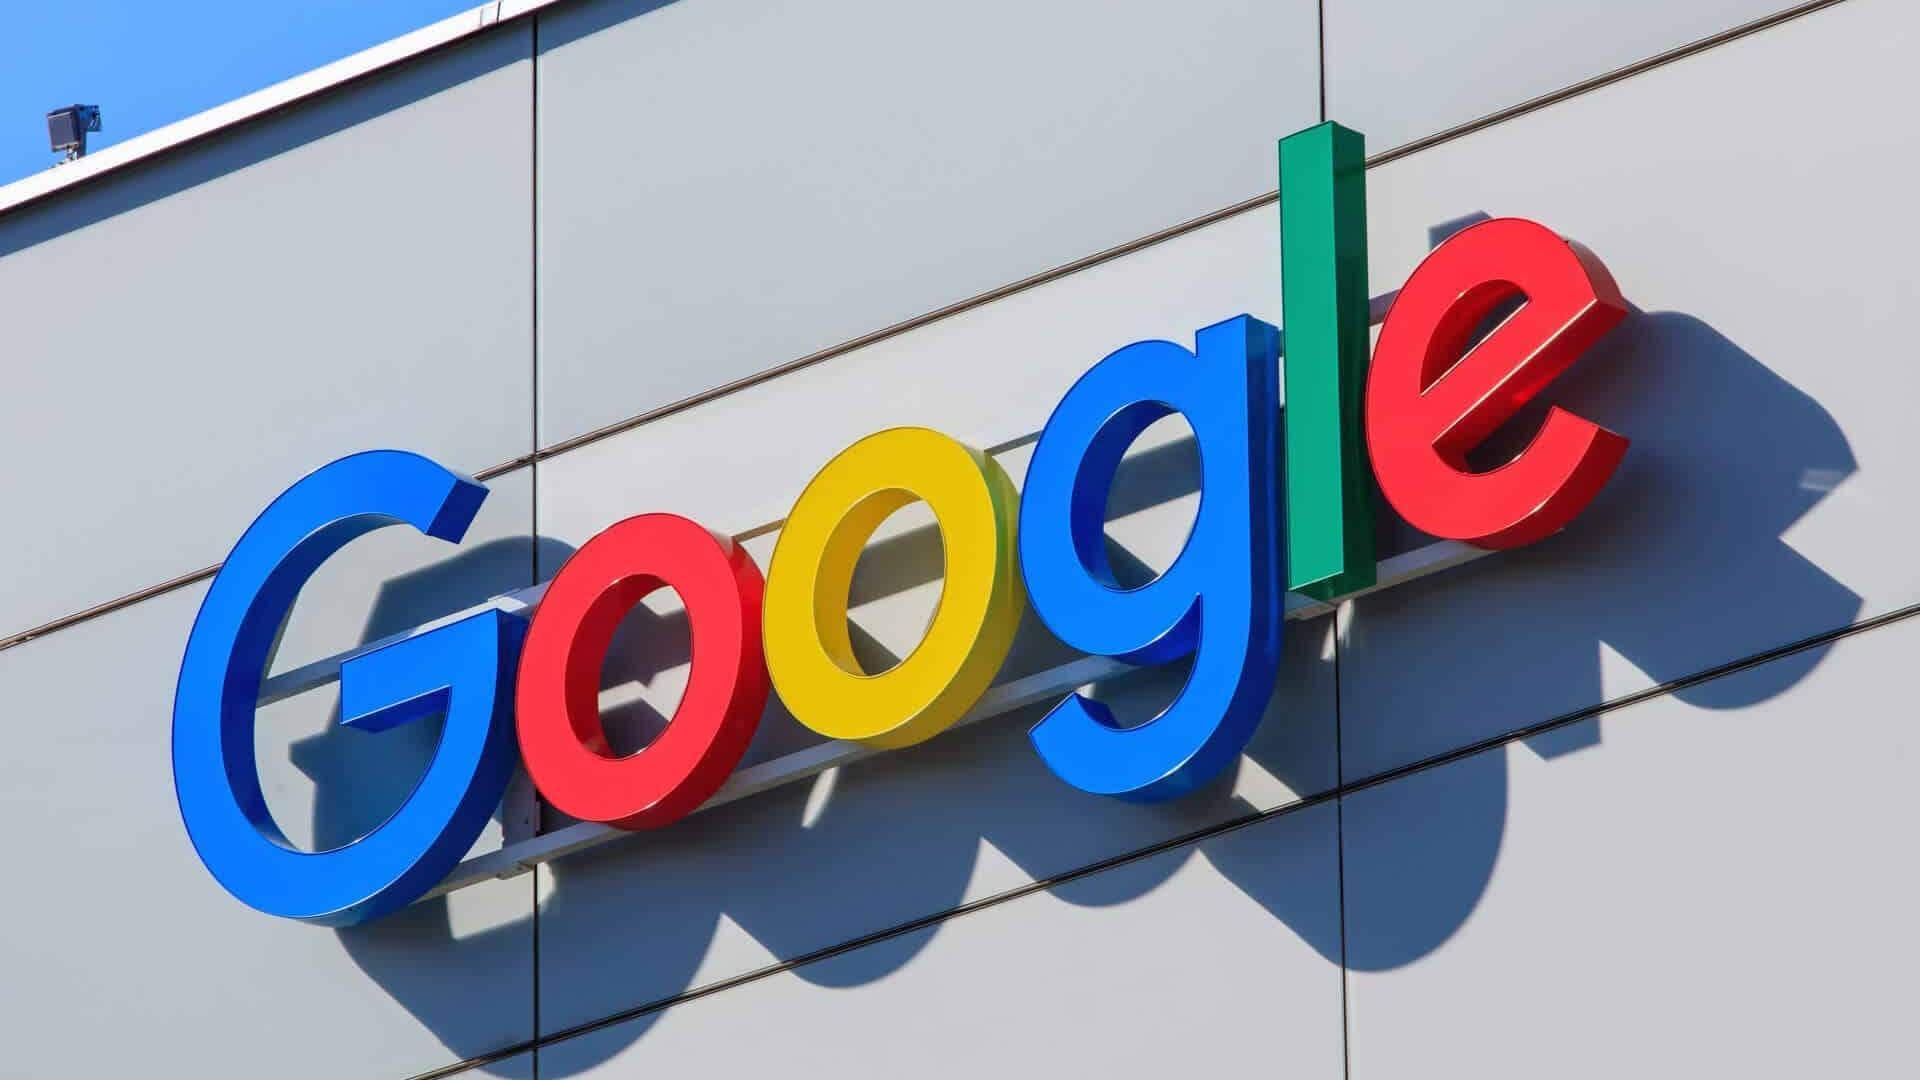 Google spent $2.1 billion on layoffs and severance in 2023